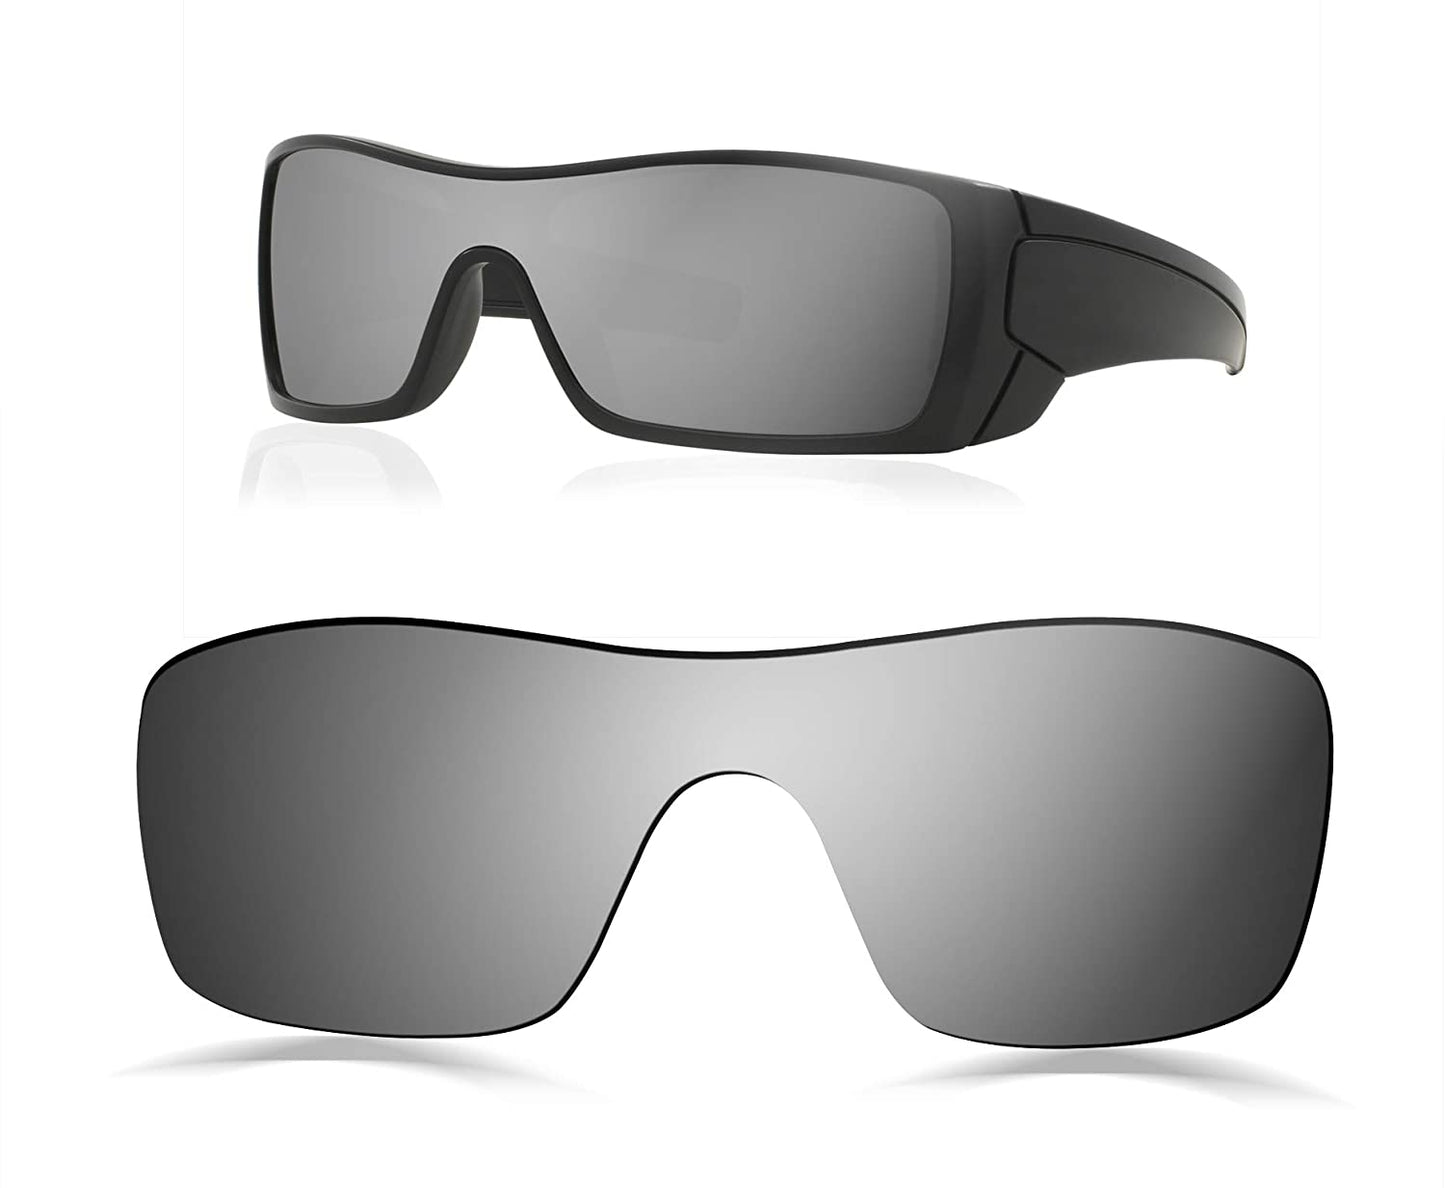 Prizo Polarized Replacement Lenses for Oakley Batwolf Sunglasses - Multi Options